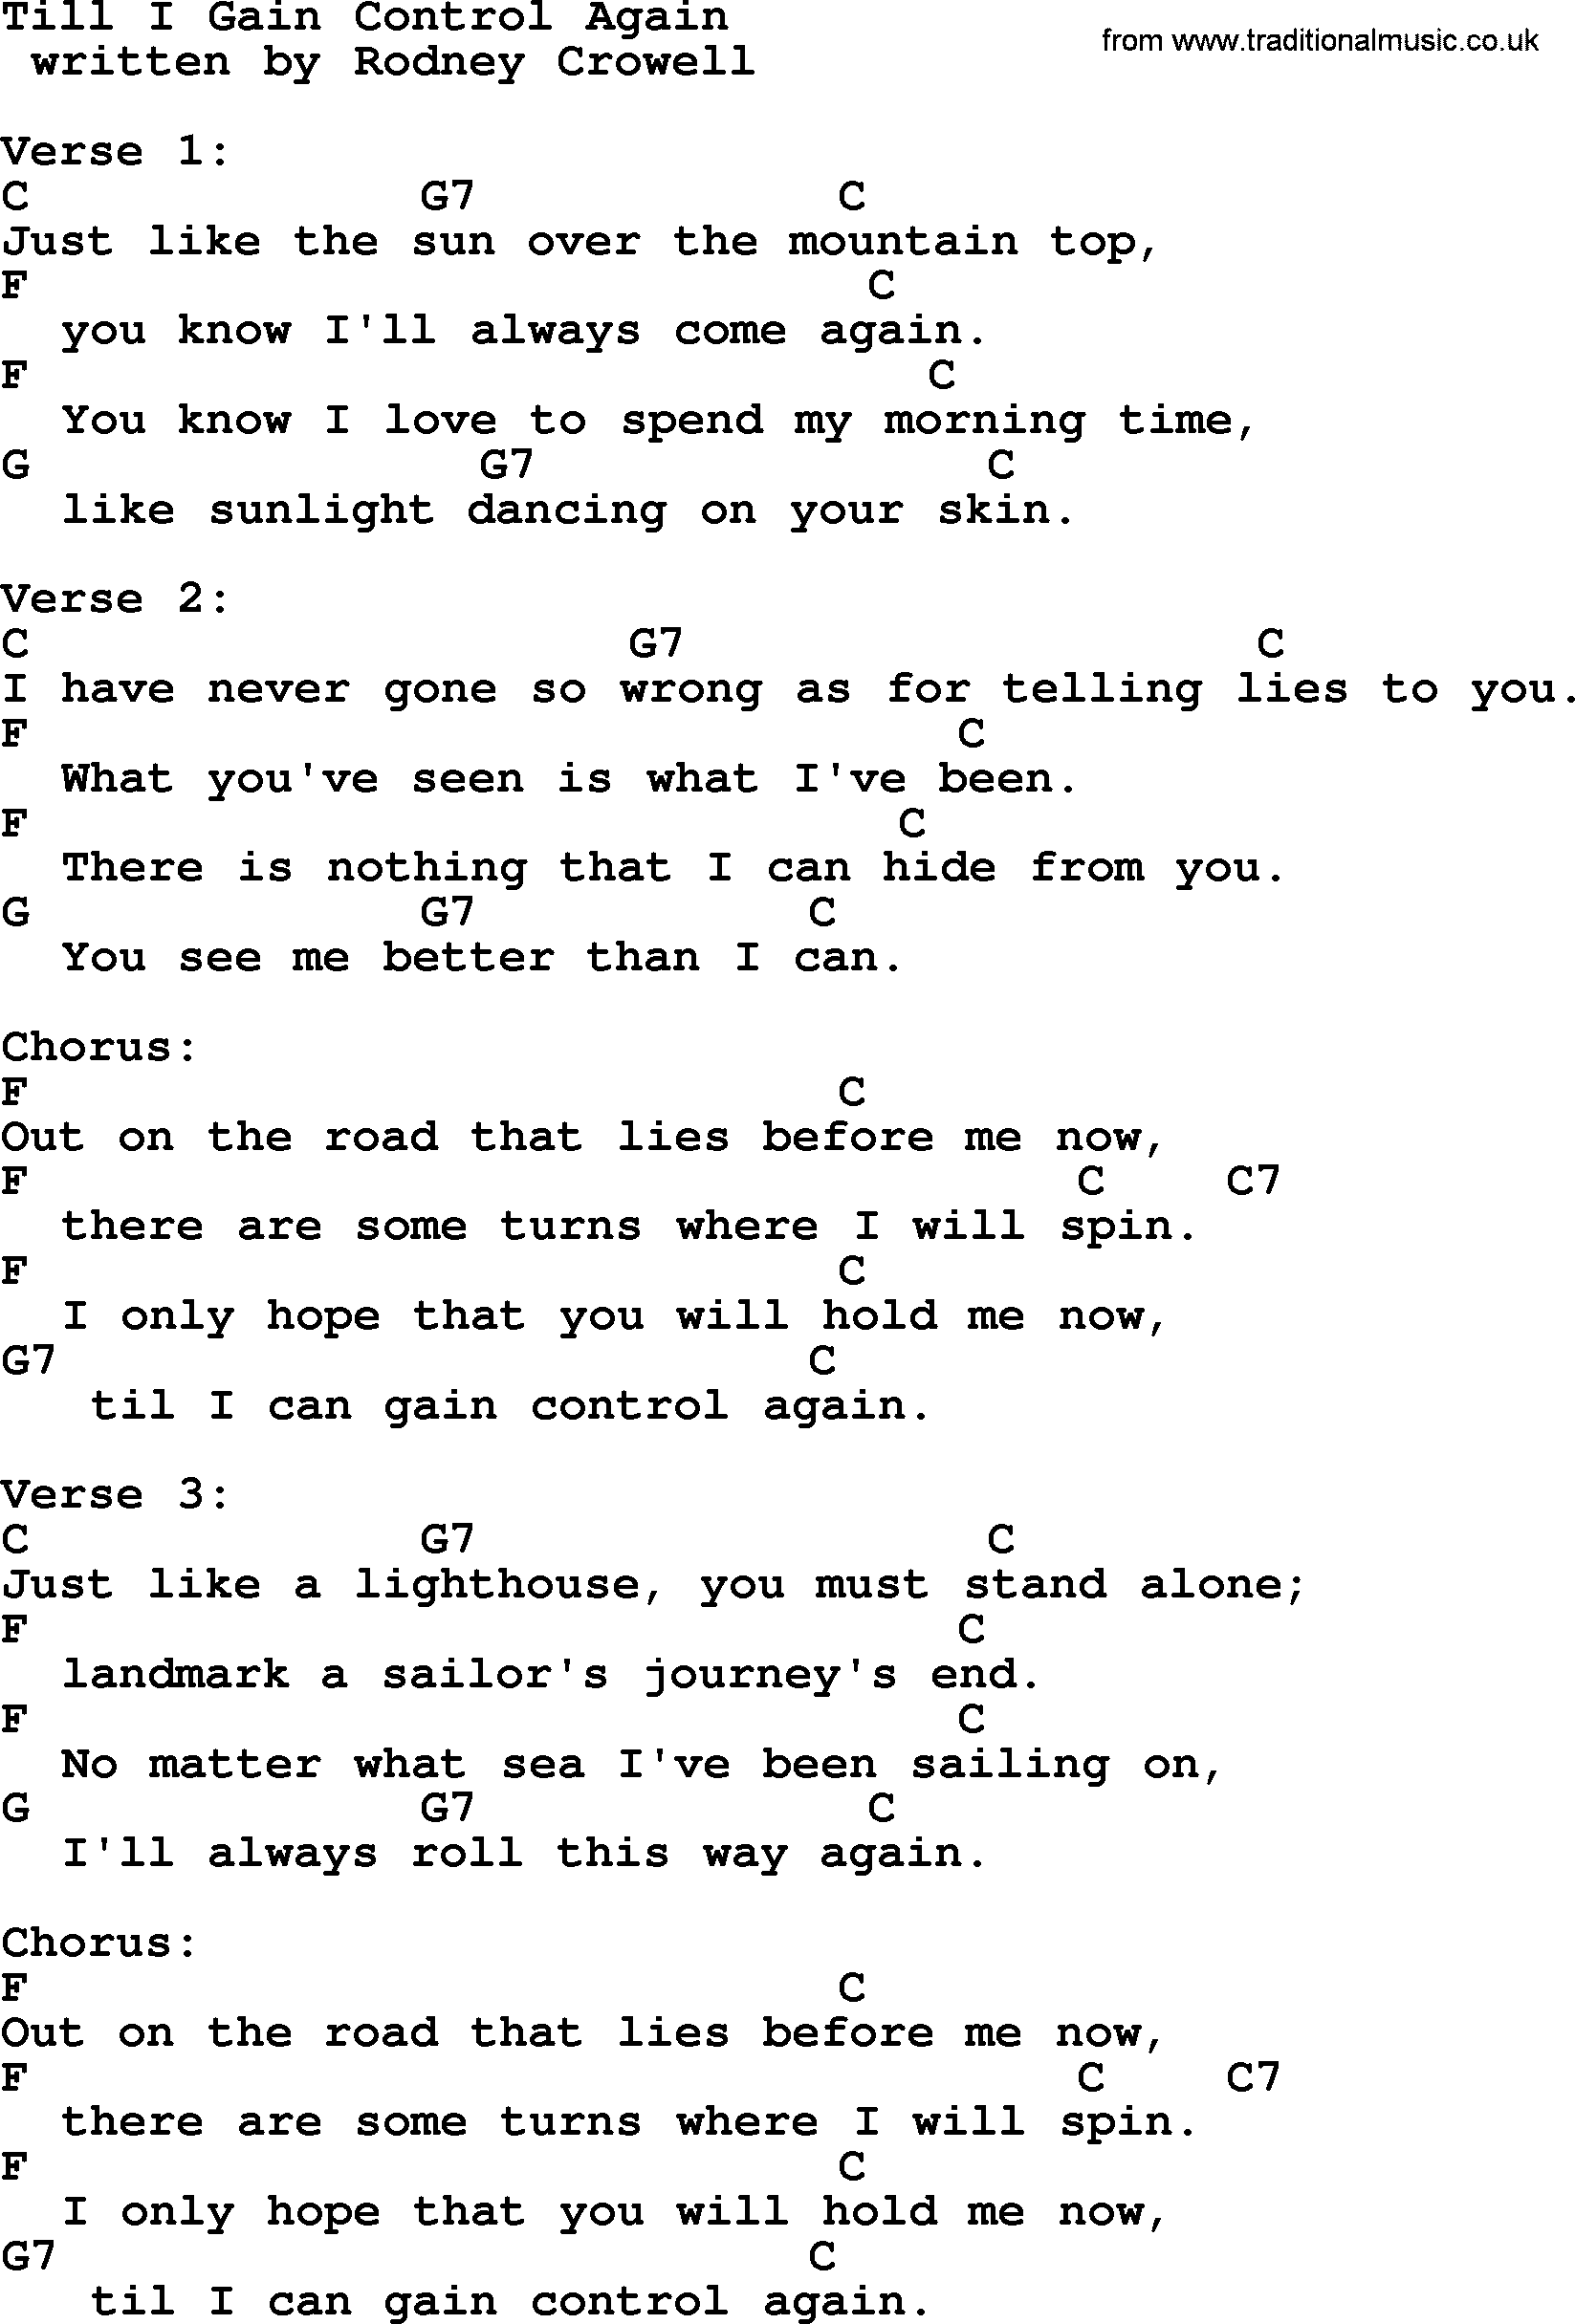 Willie Nelson song: Till I Again, lyrics and chords